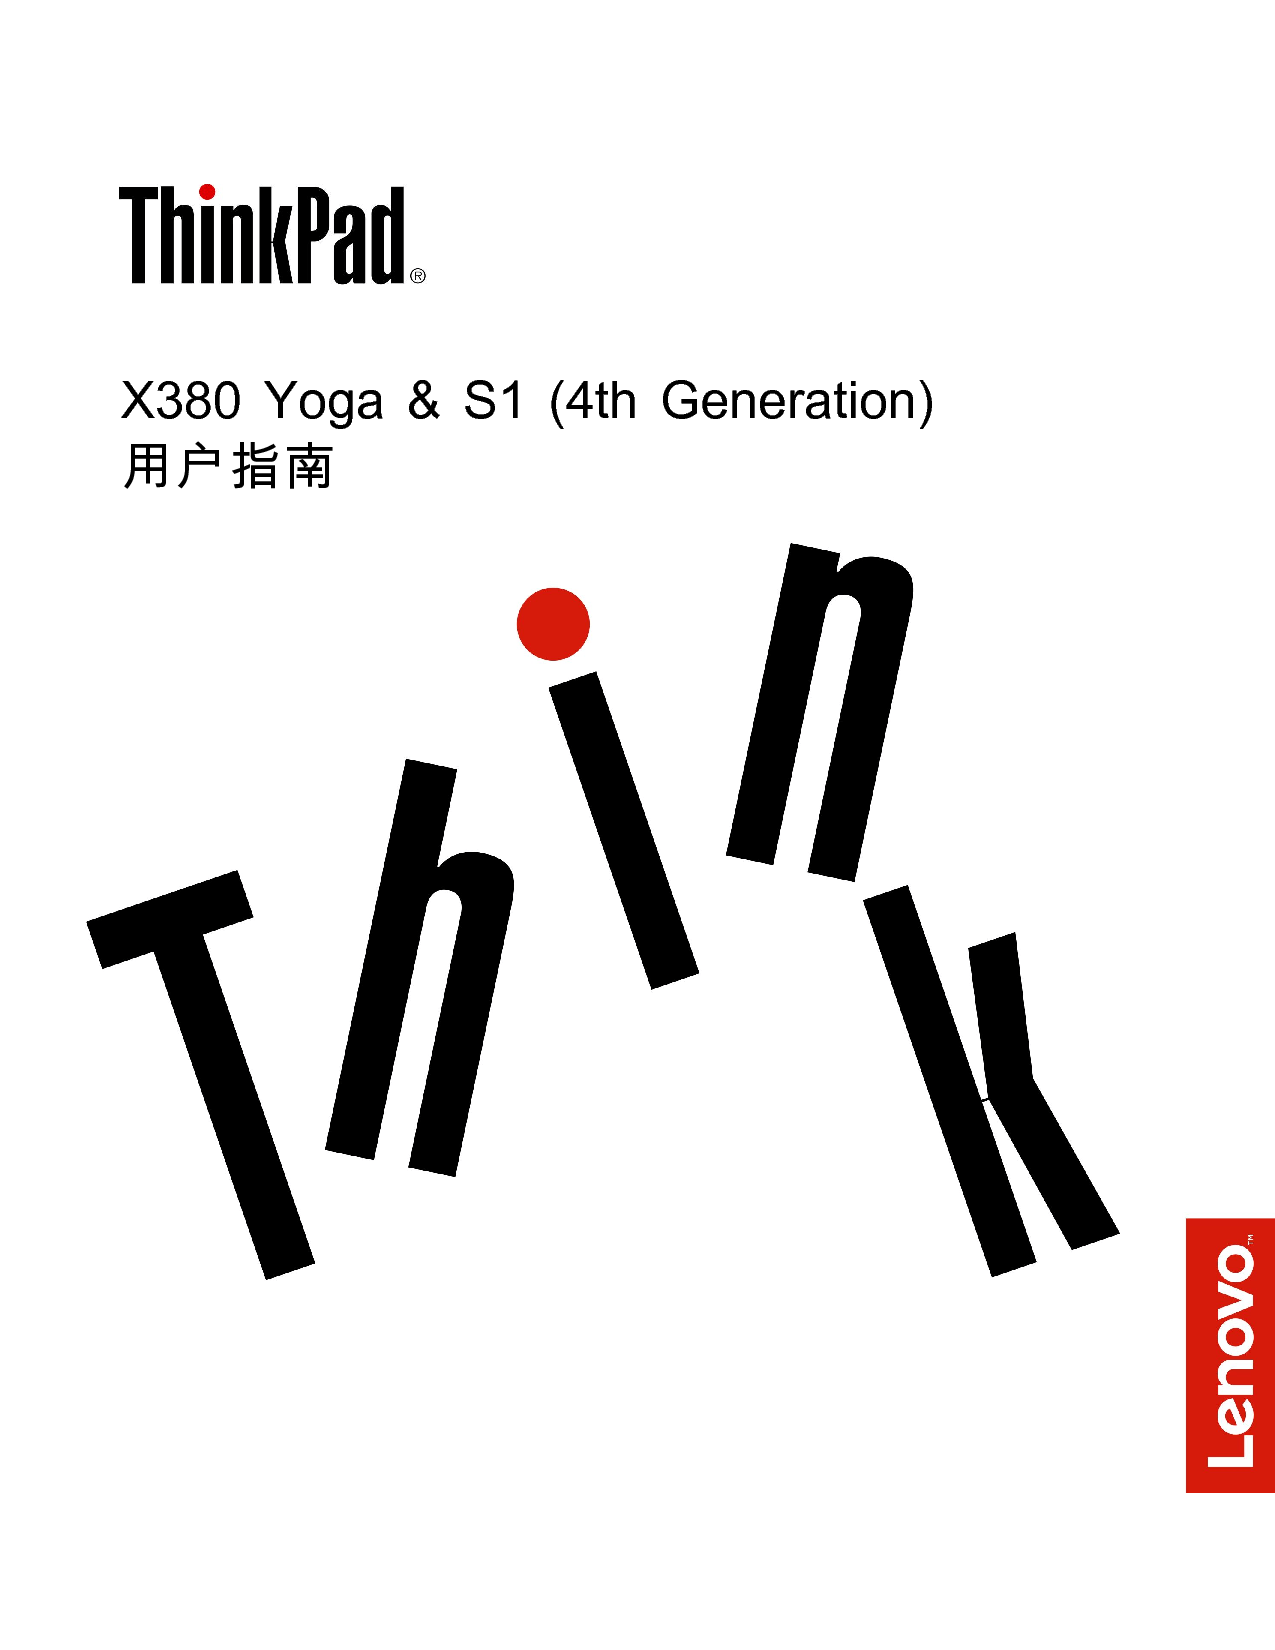 联想 Lenovo ThinkPad S1 第四代, ThinkPad X380 YOGA 用户指南 封面